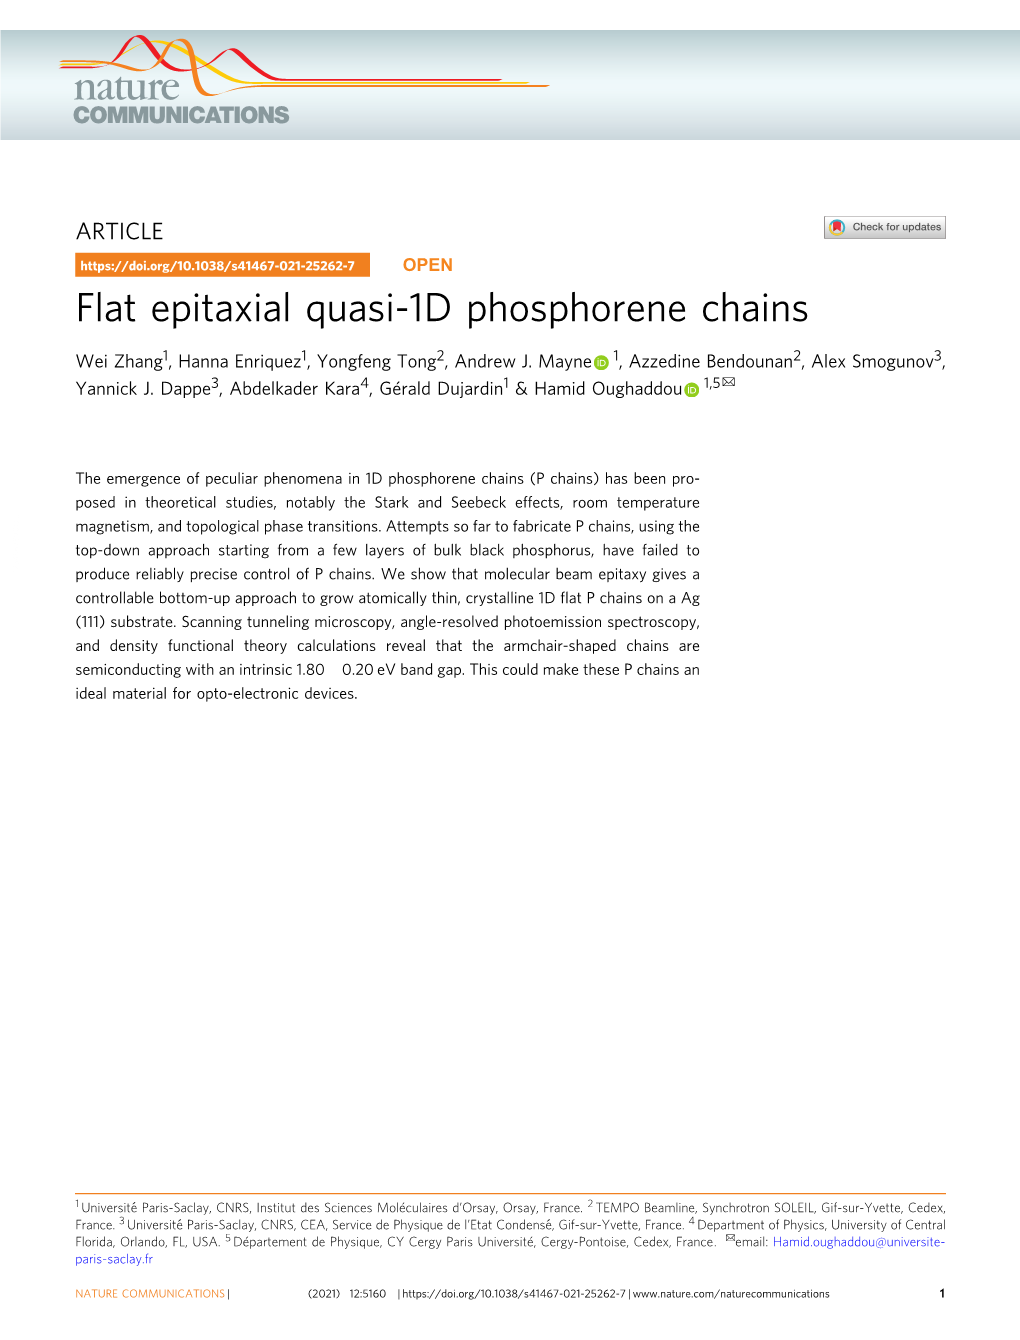 Flat Epitaxial Quasi-1D Phosphorene Chains